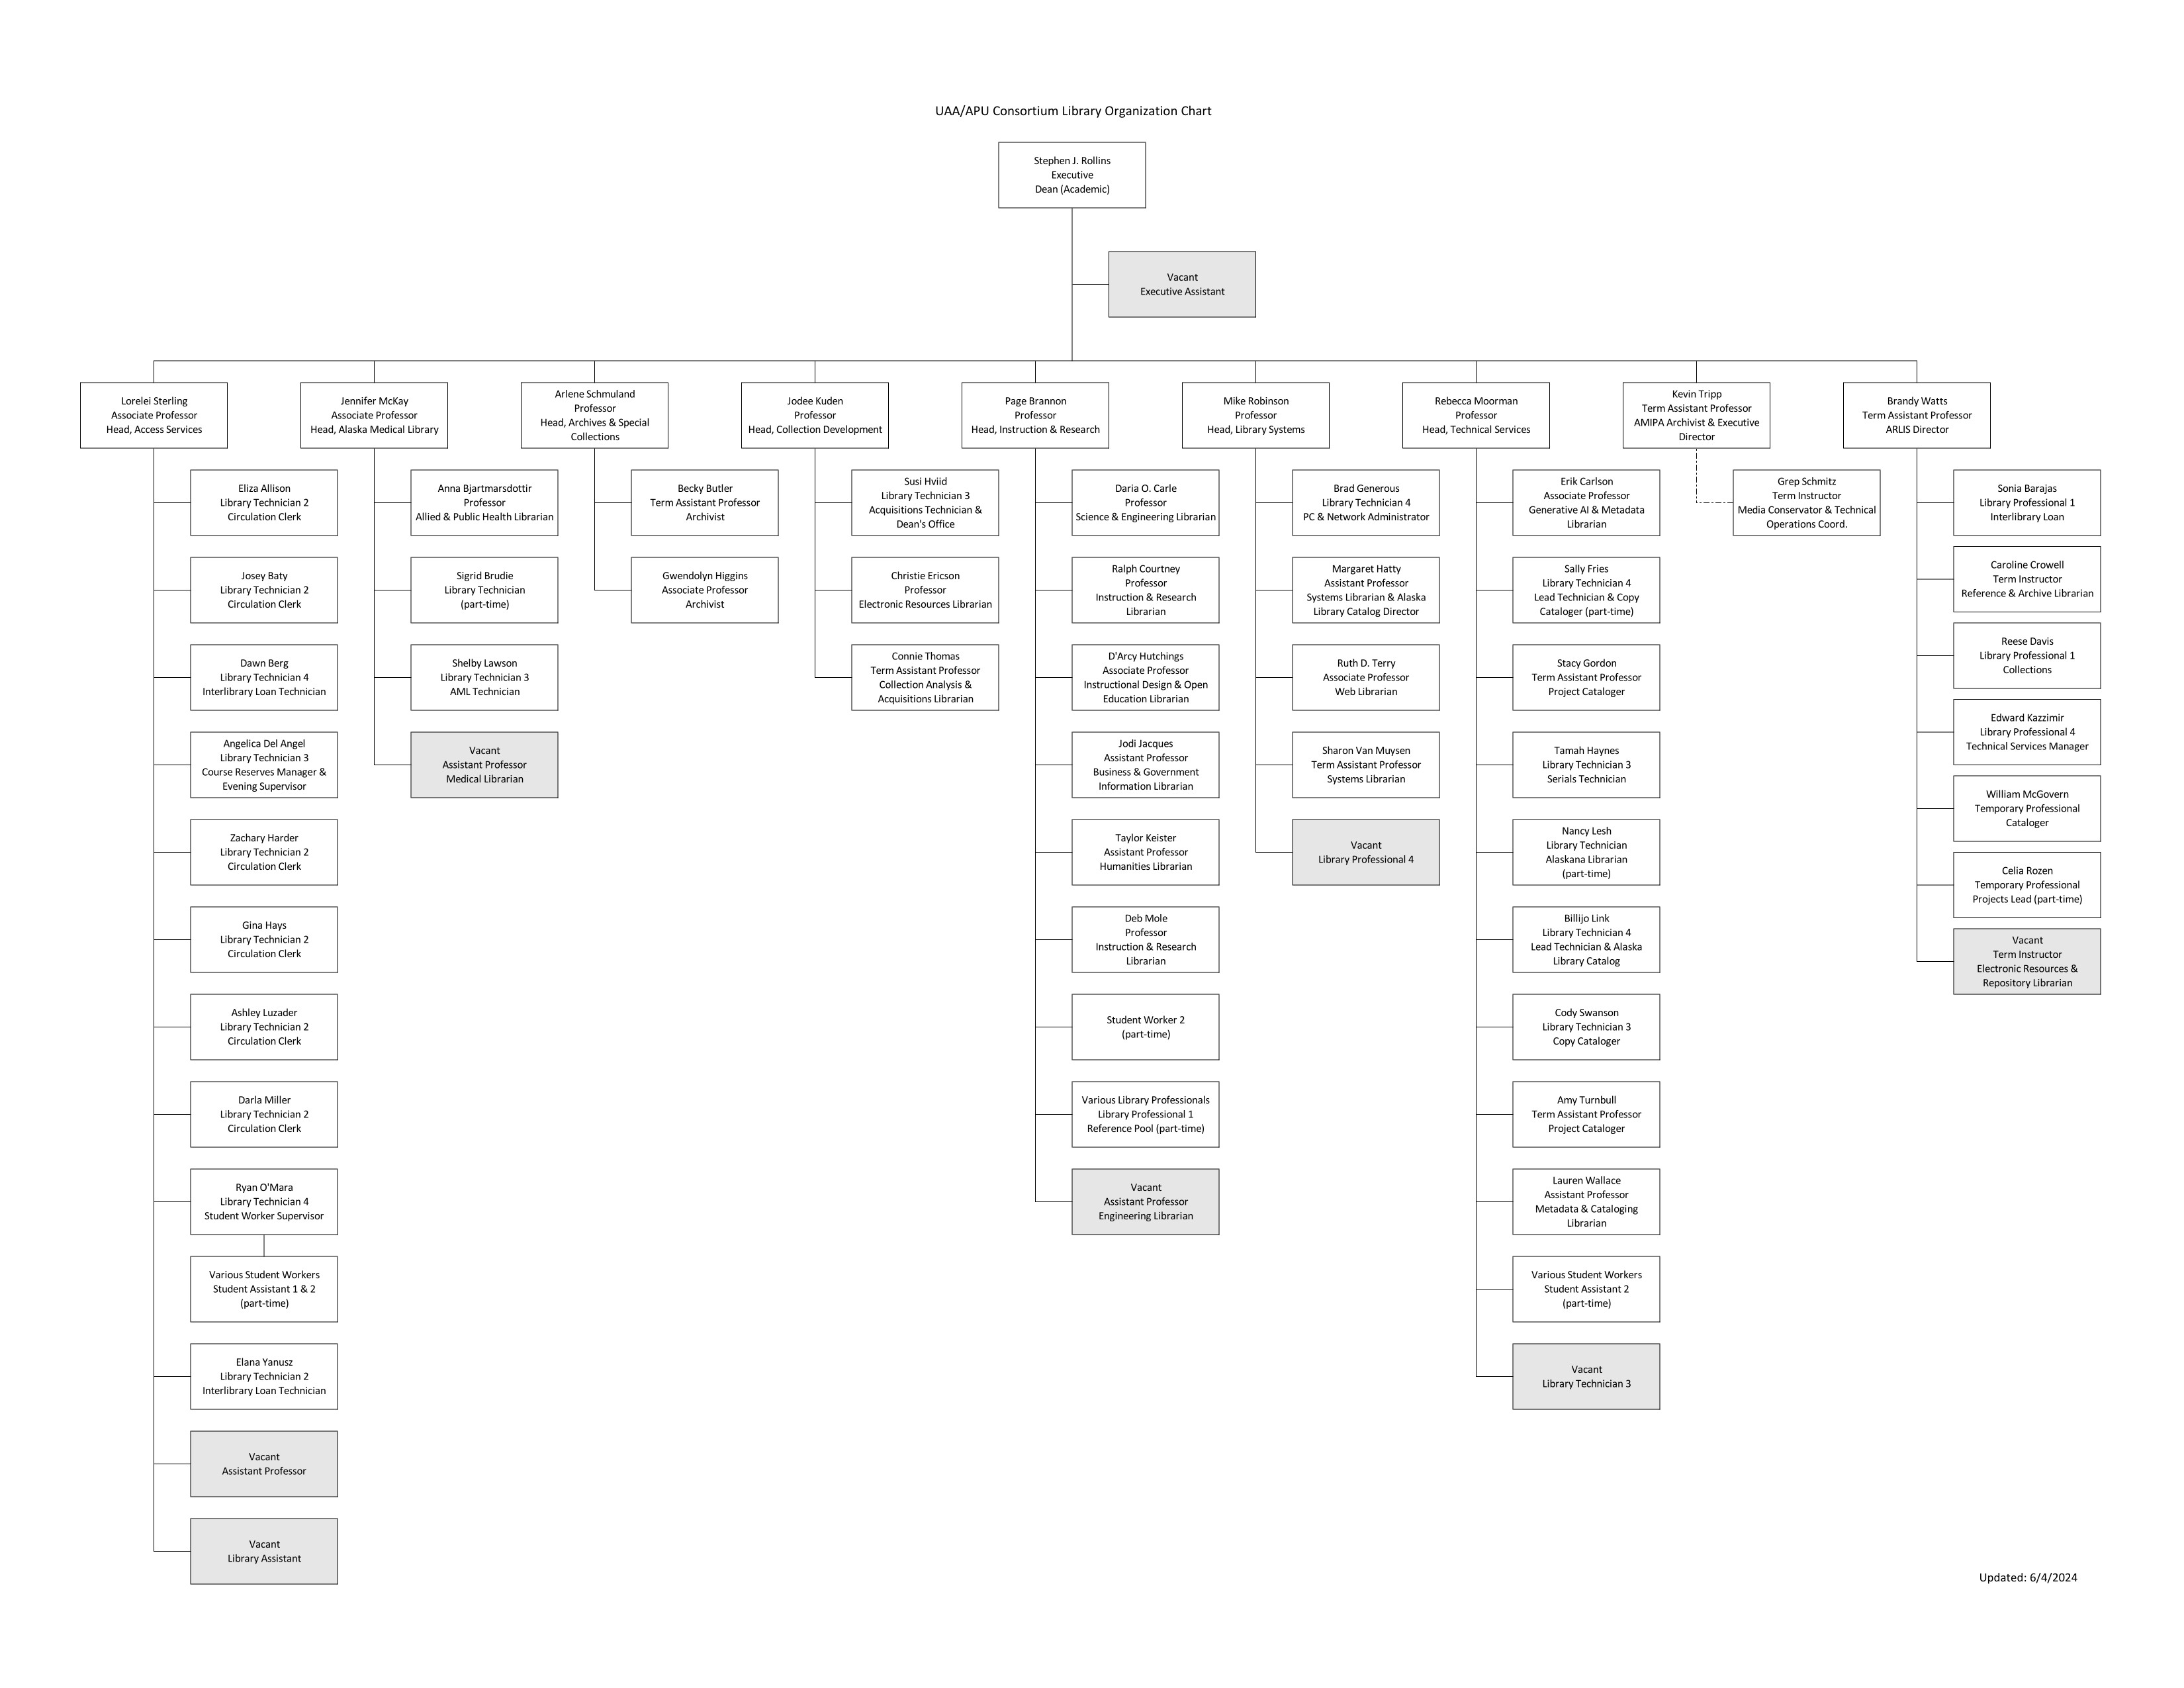 Consortium Library Organizational Chart